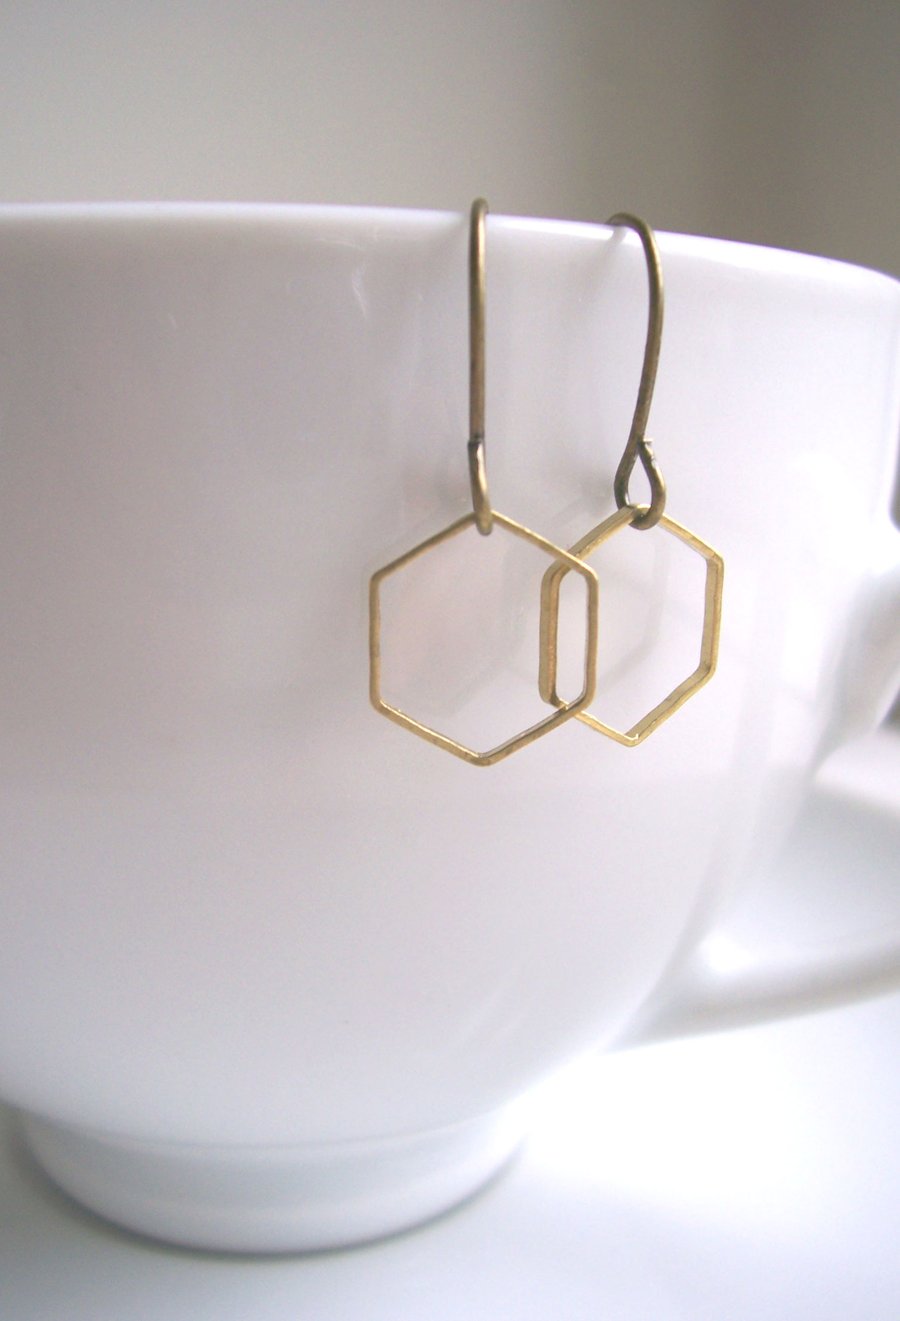 Delicate Honeycomb hexagon earrings - mixed metals golden brass geometric shapes